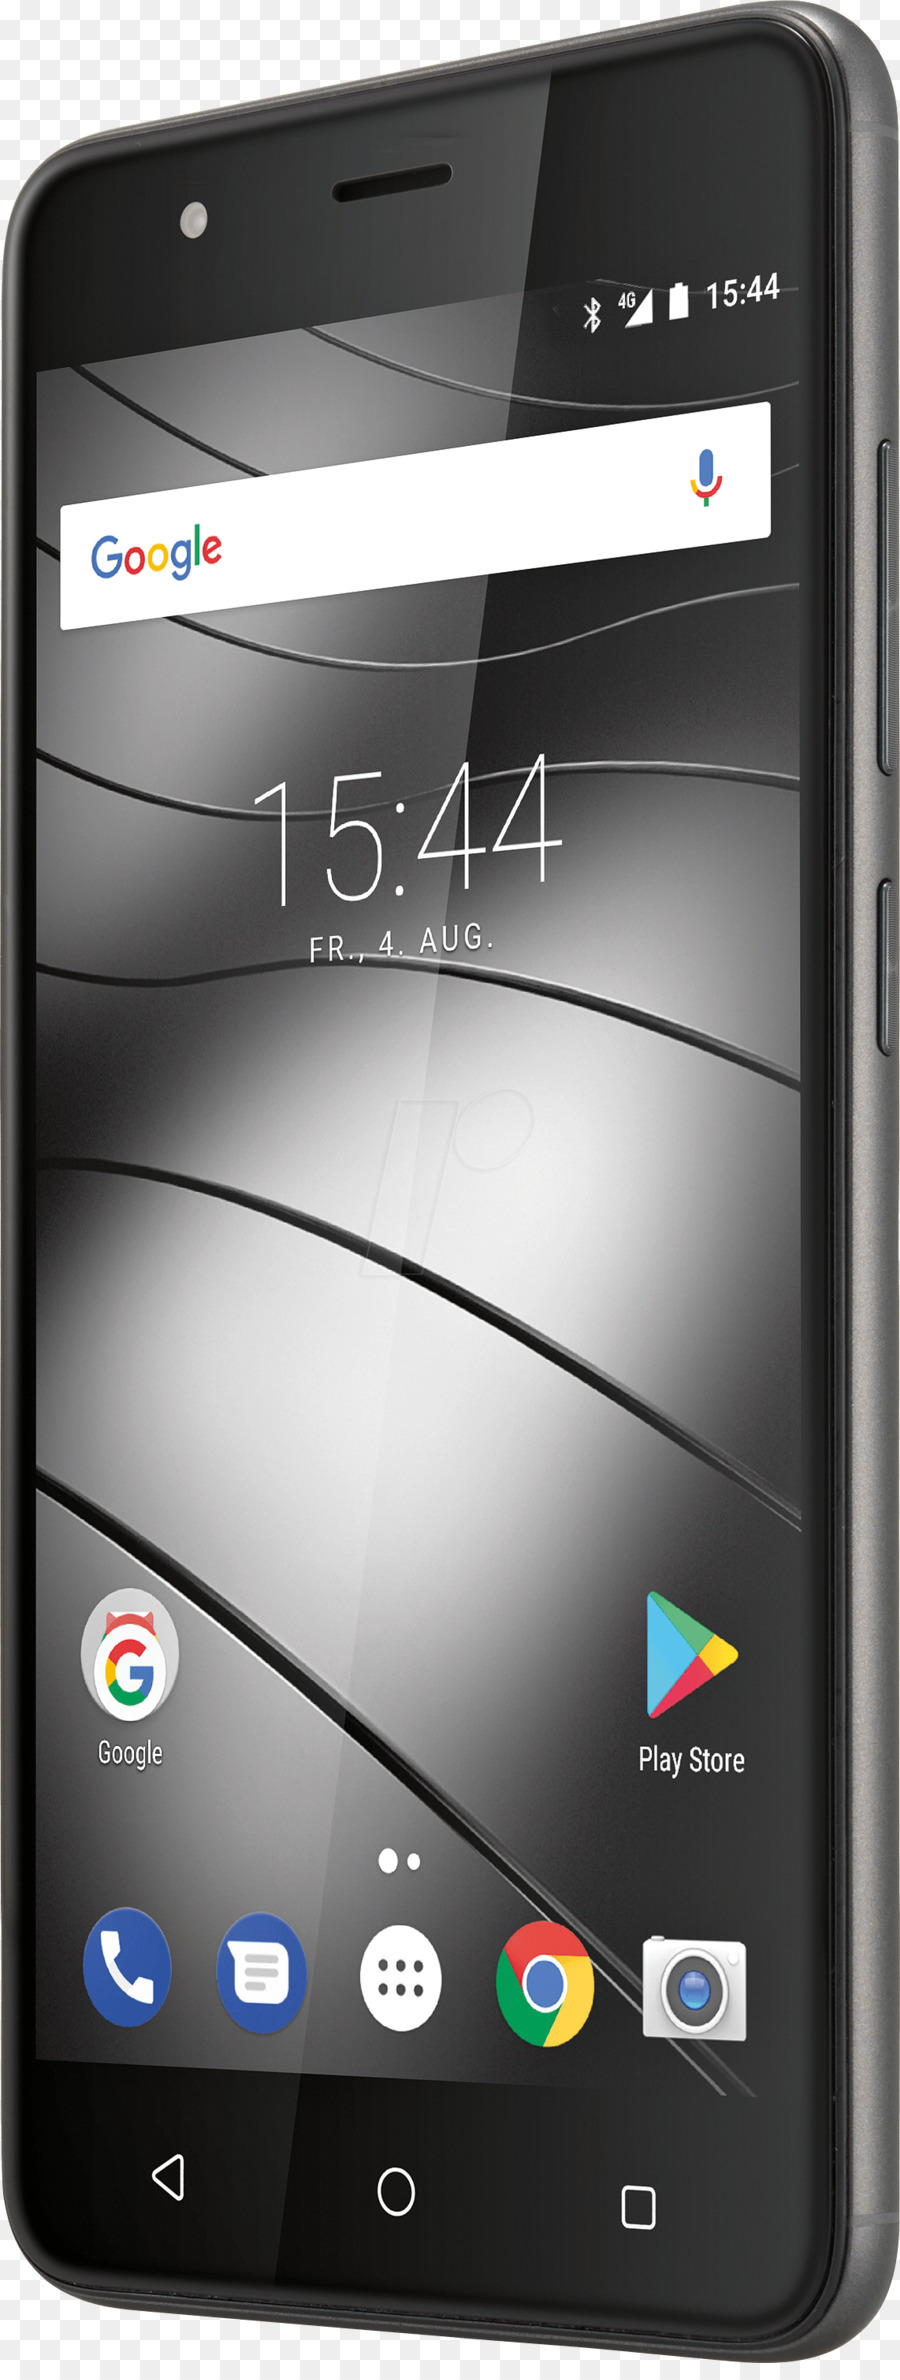 Gigaset GS170 LTE smartphone 12.7 cm 1,3 GHz Quad Core, 16 GB 13 MPix Android 7.0 Torrone Nero Telefono MediaTek - smartphone